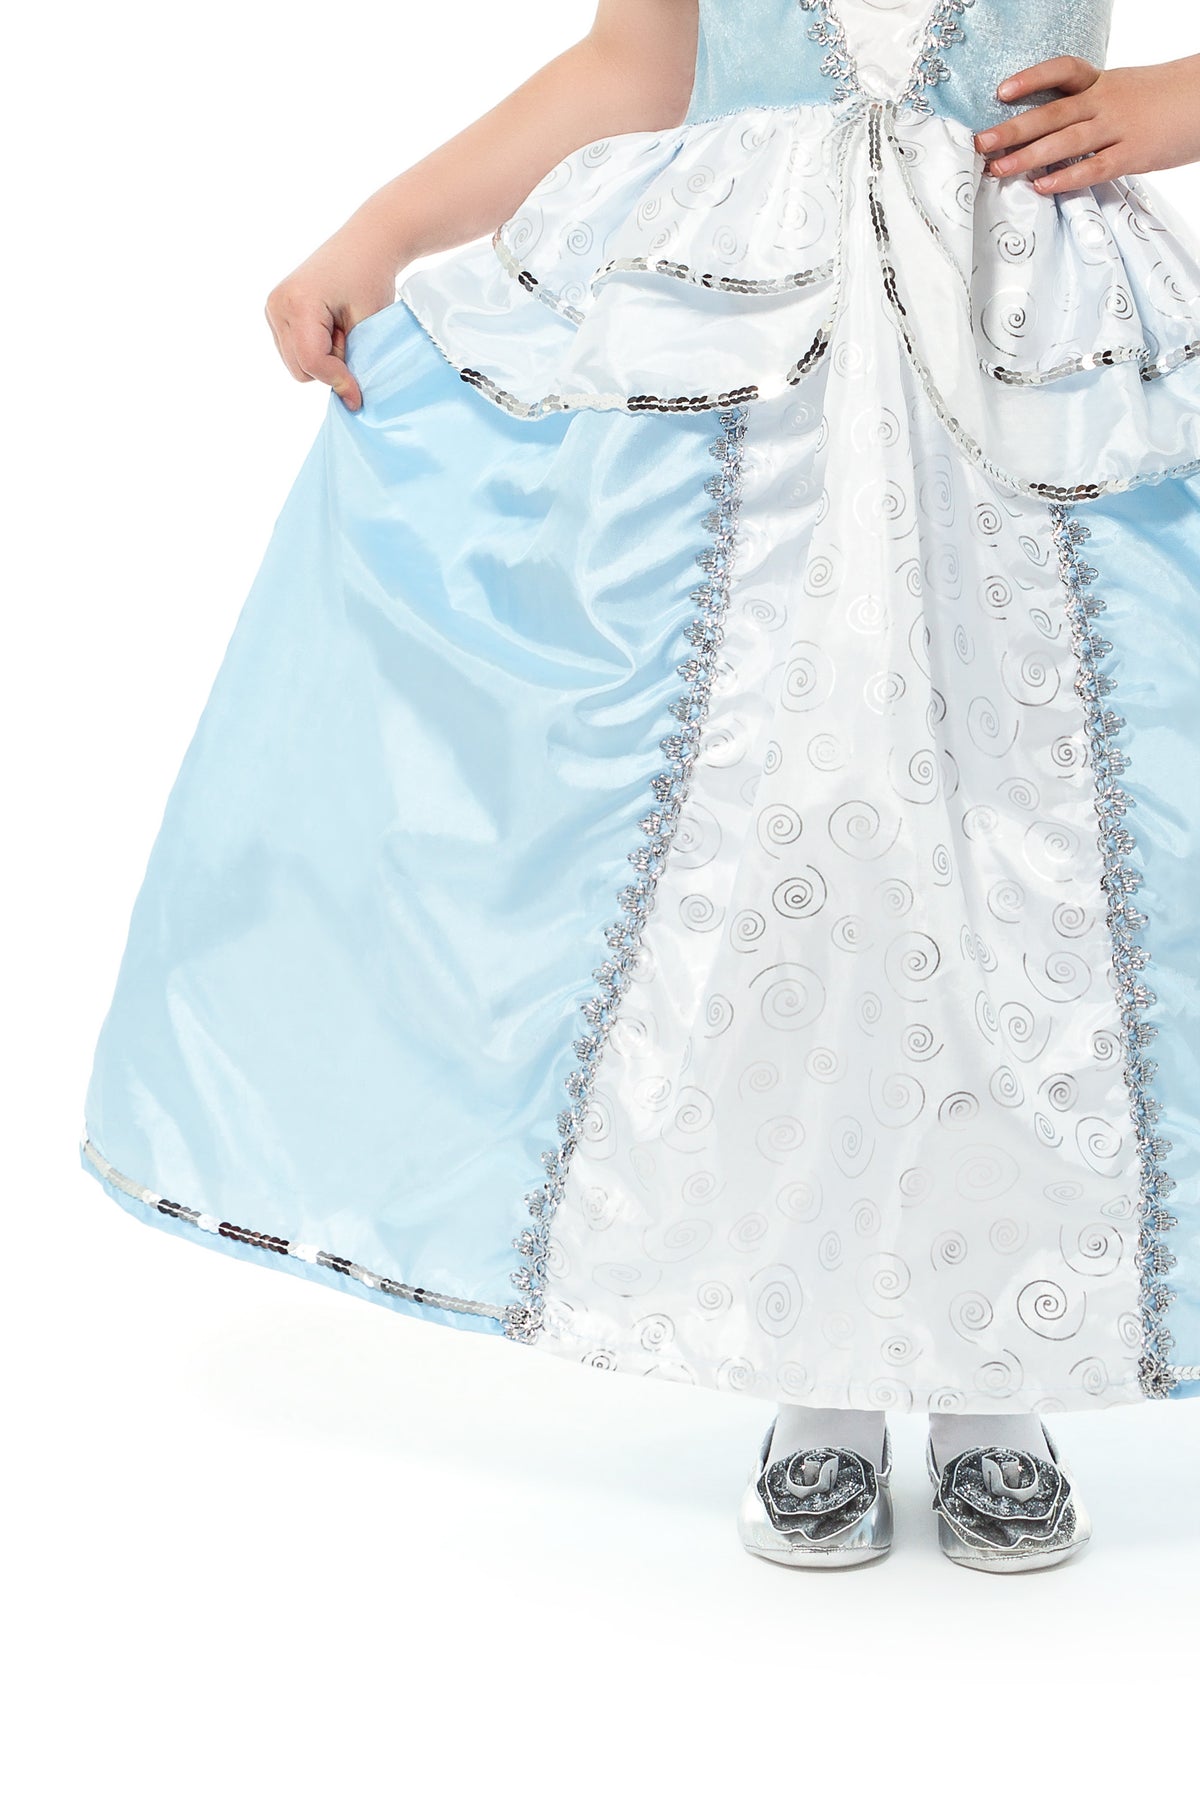 cinderella dress for girls